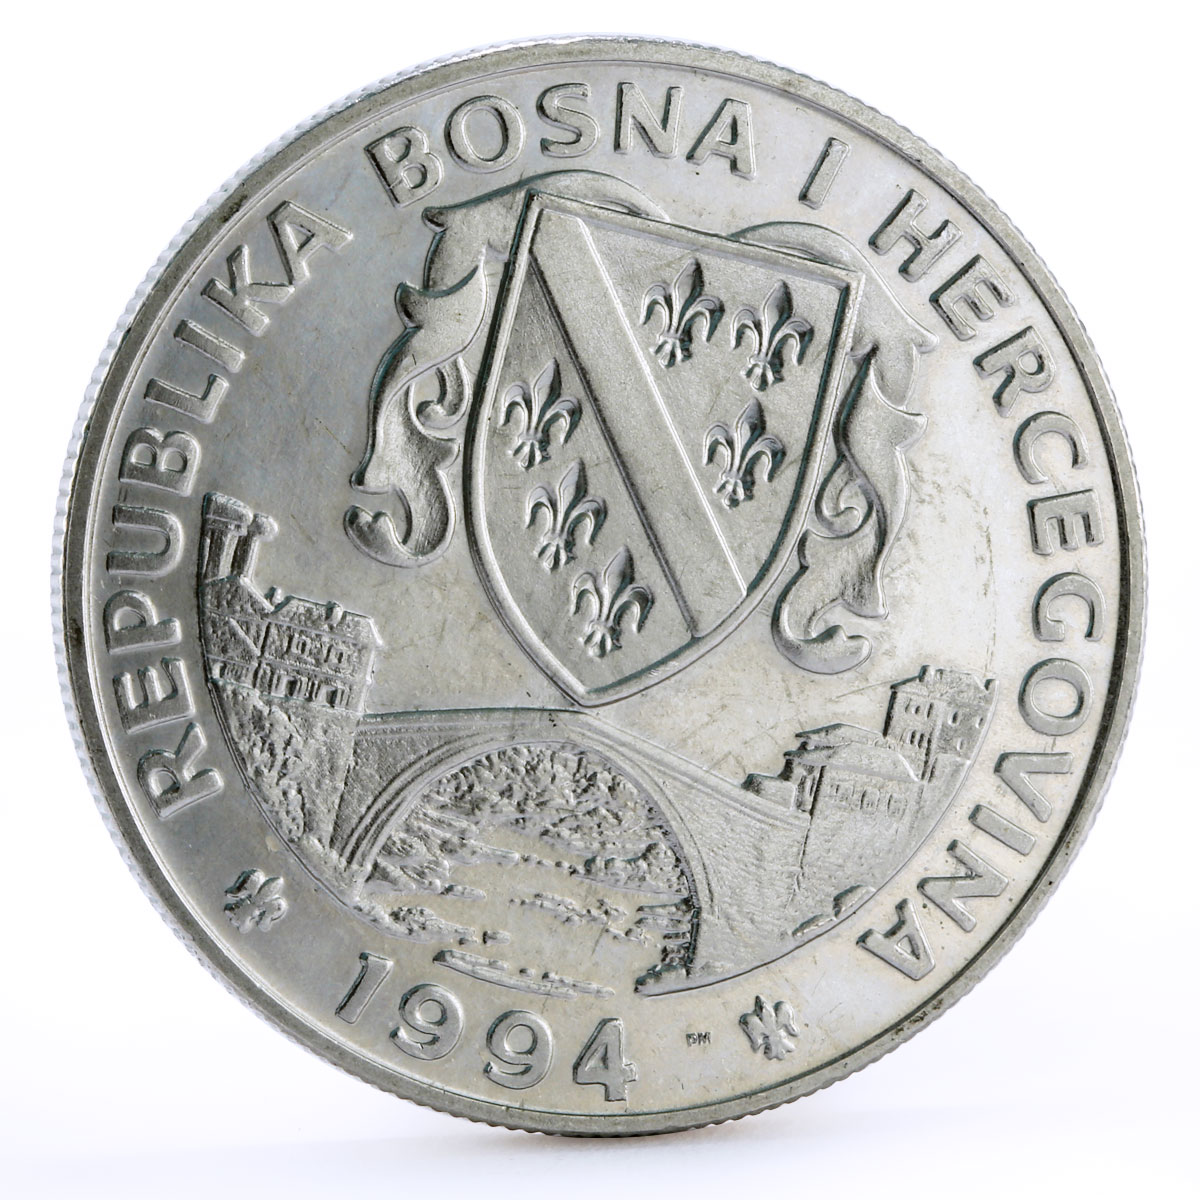 Bosnia and Herzegovina 500 dinara Endangered Wildlife Eohippus CuNi coin 1994